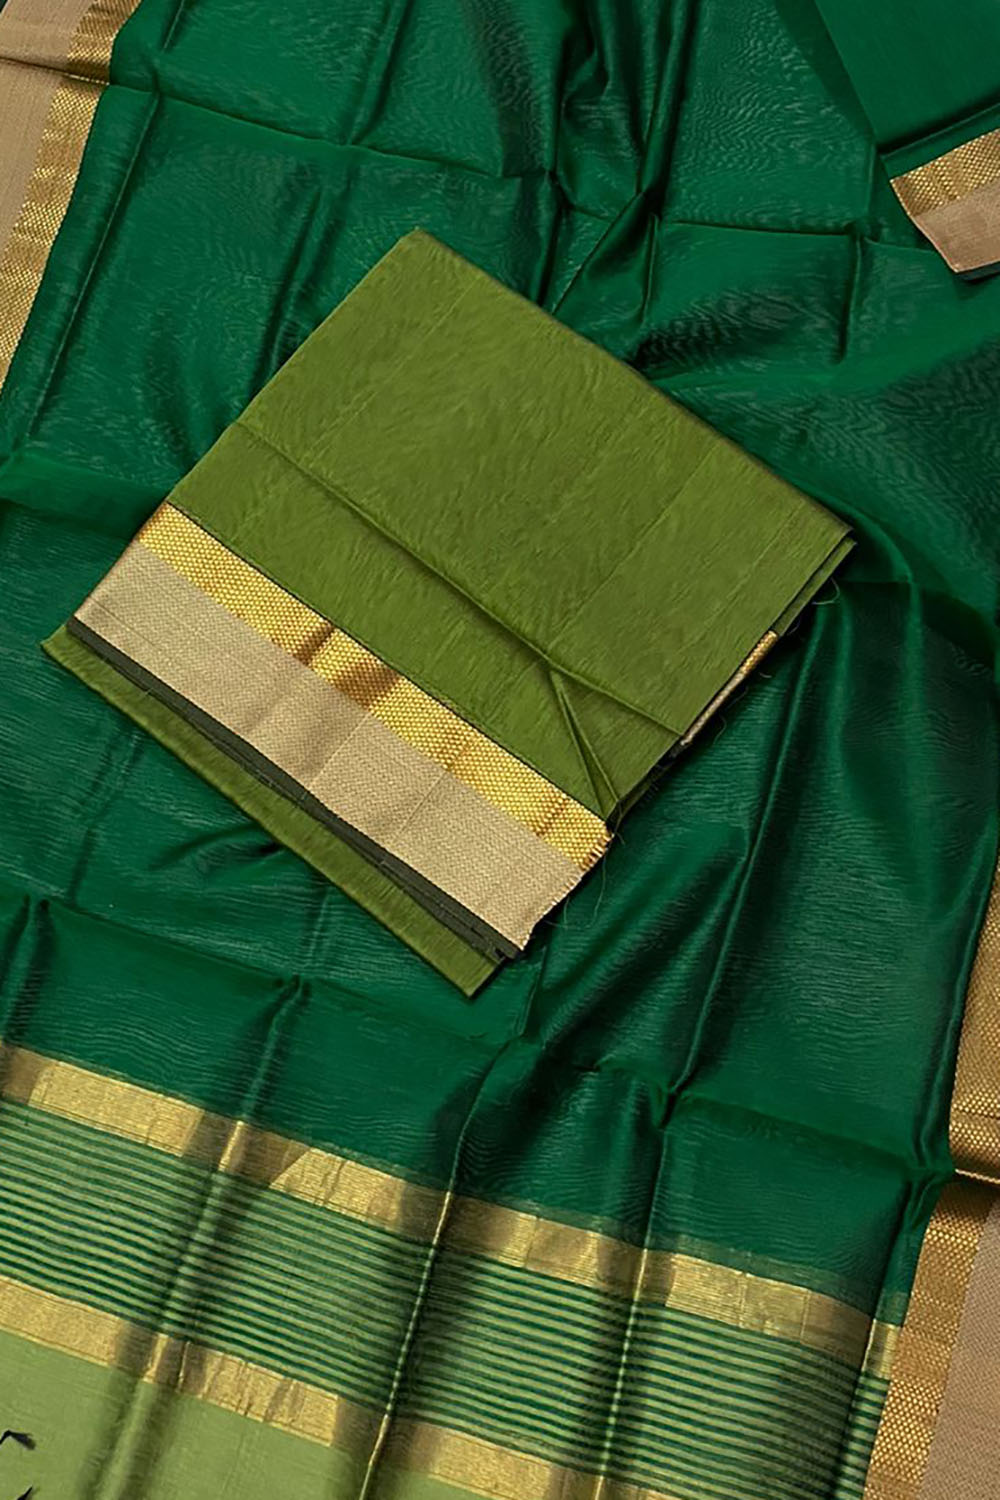 Get the Latest Green Maheshwari Handloom Suit Set Online - Shop Now! - Luxurion World